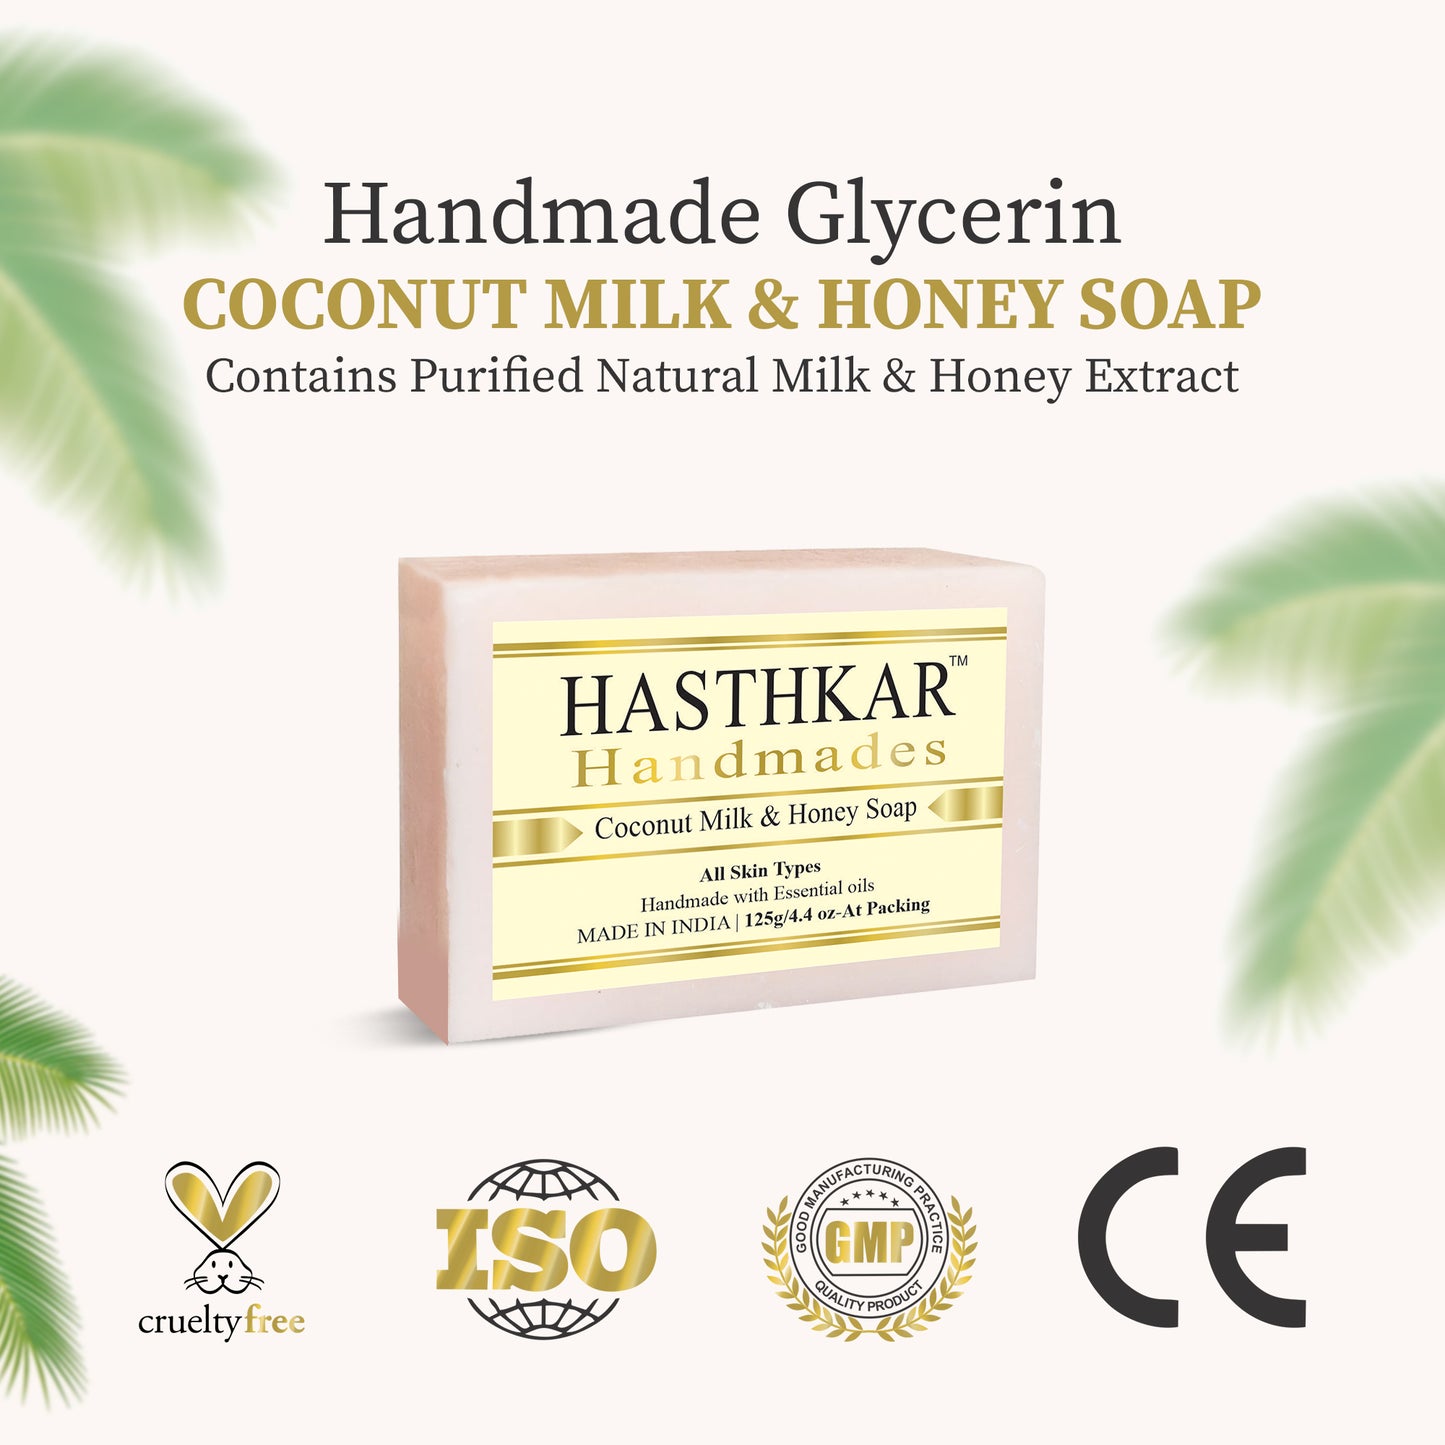 Hasthkar Handmades Glycerine Coconut milk & honey Soap 125gm Pack of 2